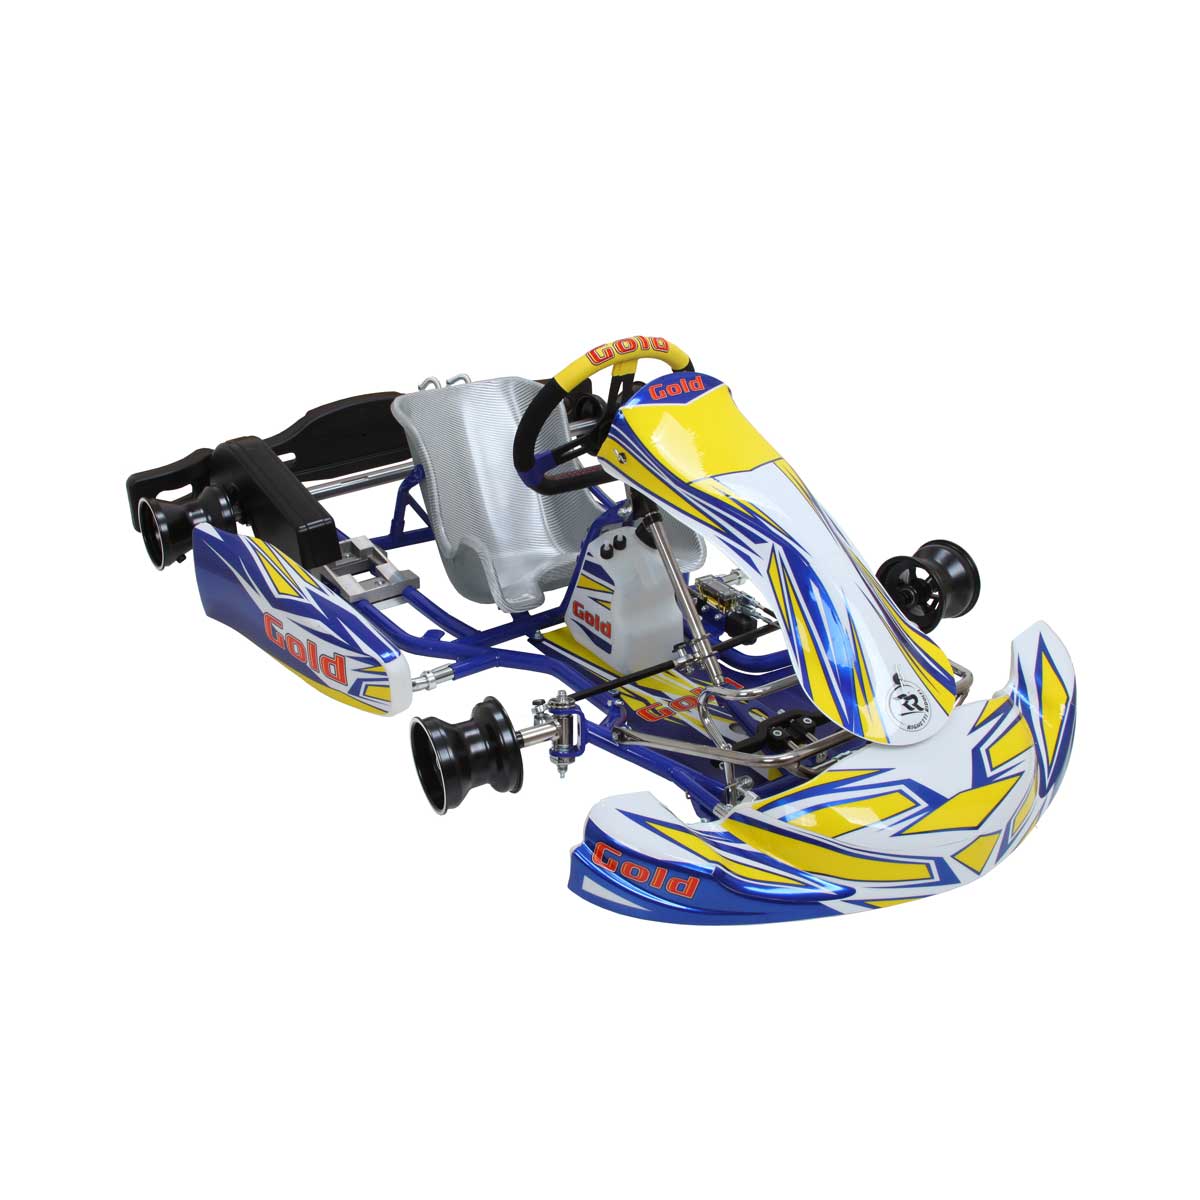 Jerrican essence métal 20 litres - Action karting - Paddock